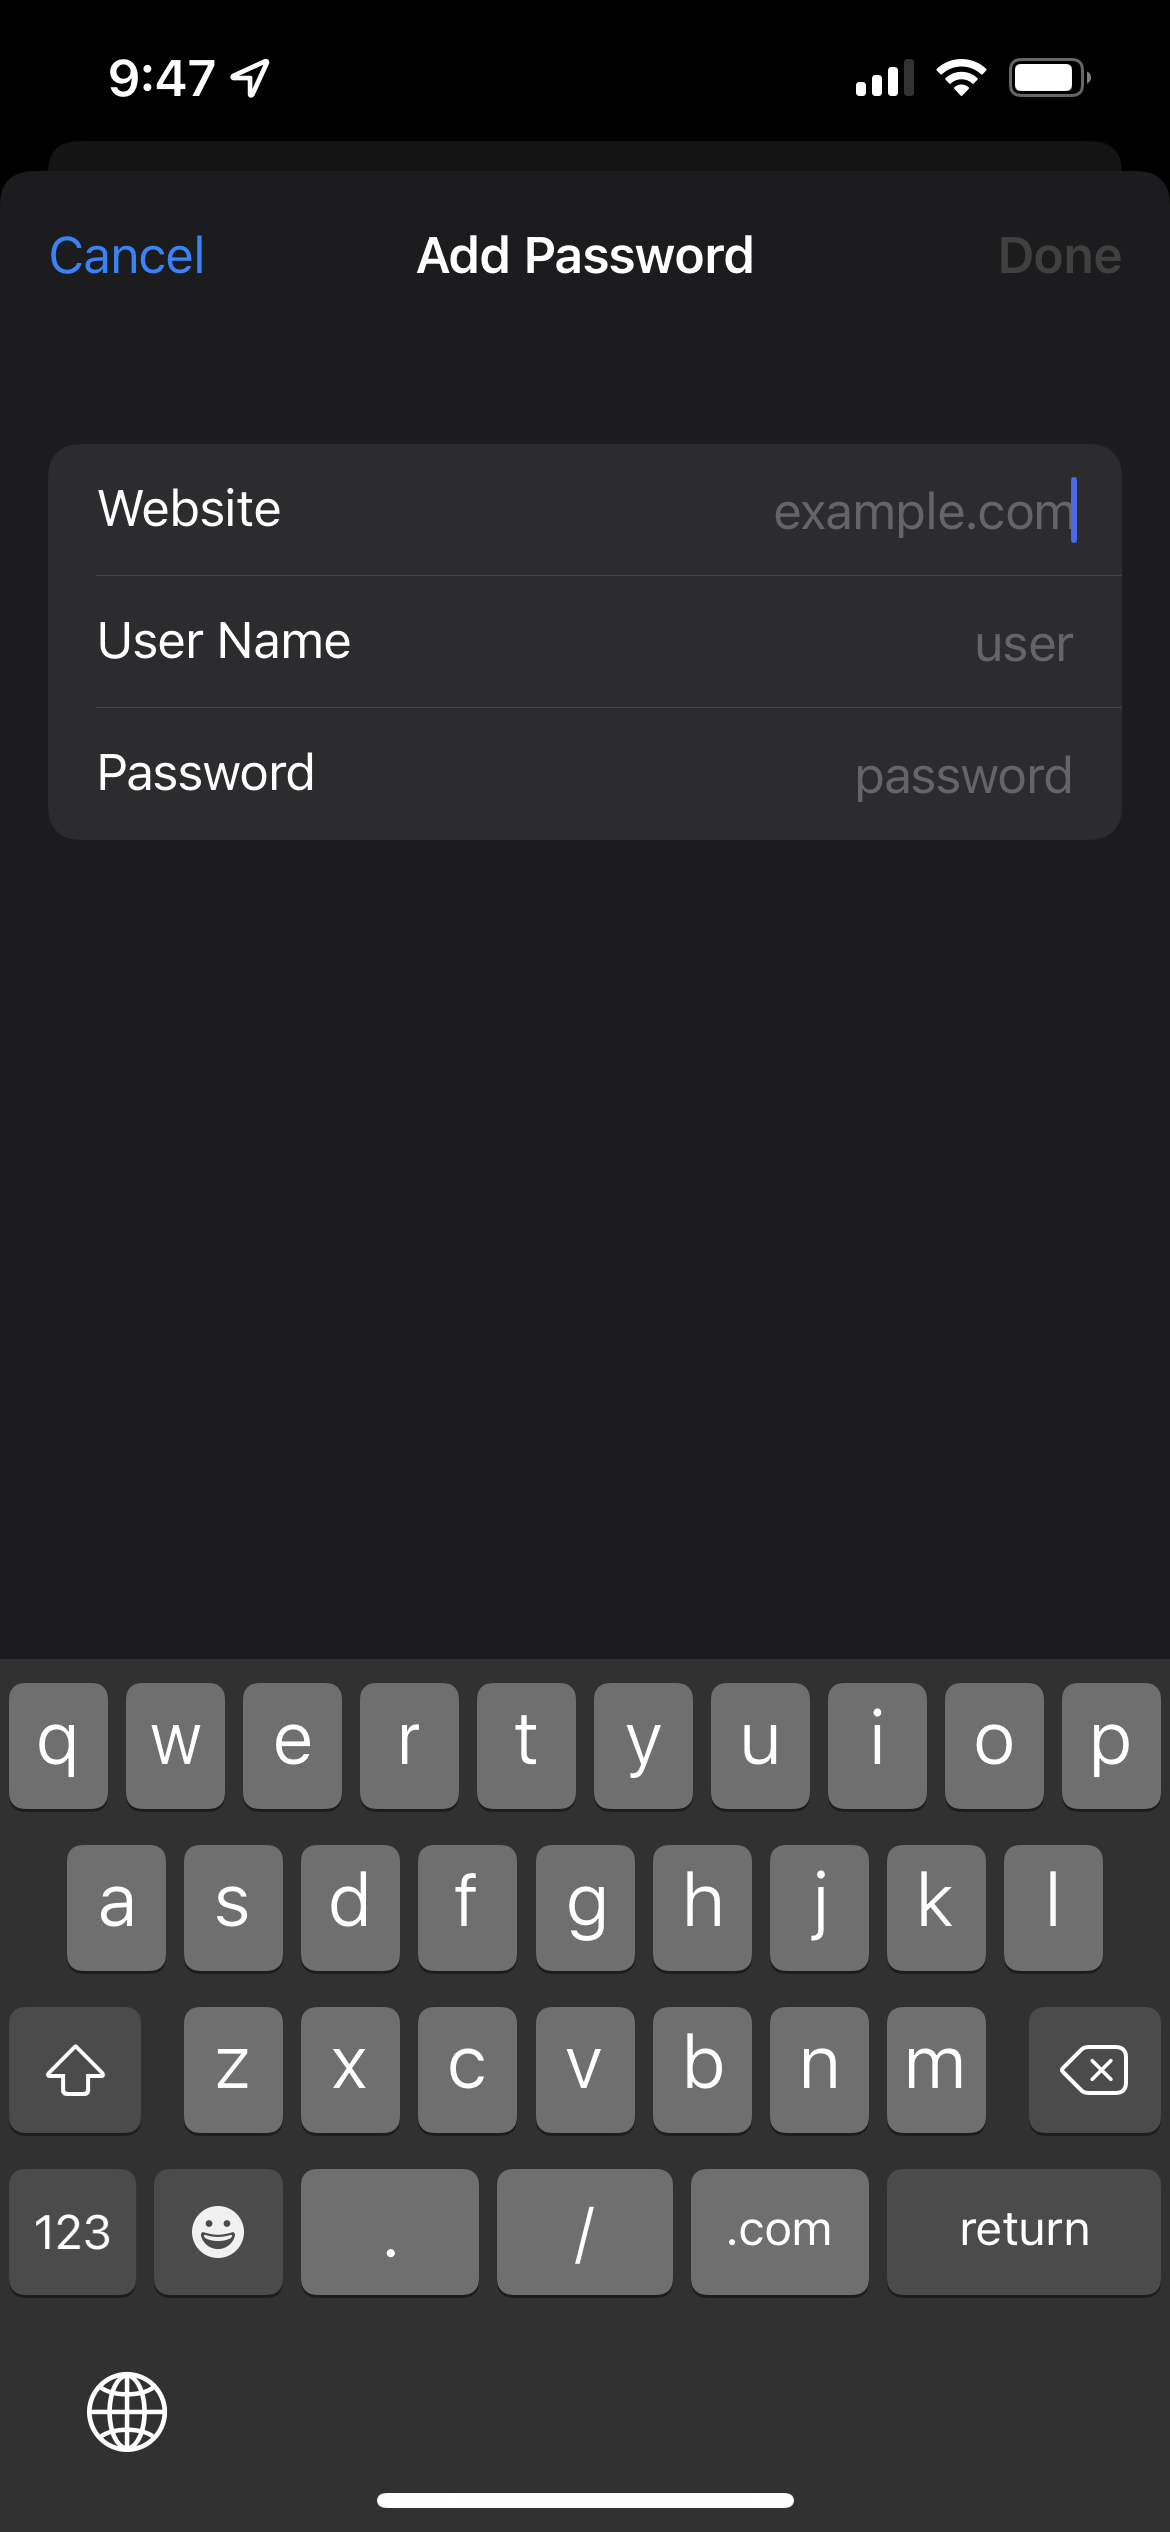 Manually adding a password in iOS 15